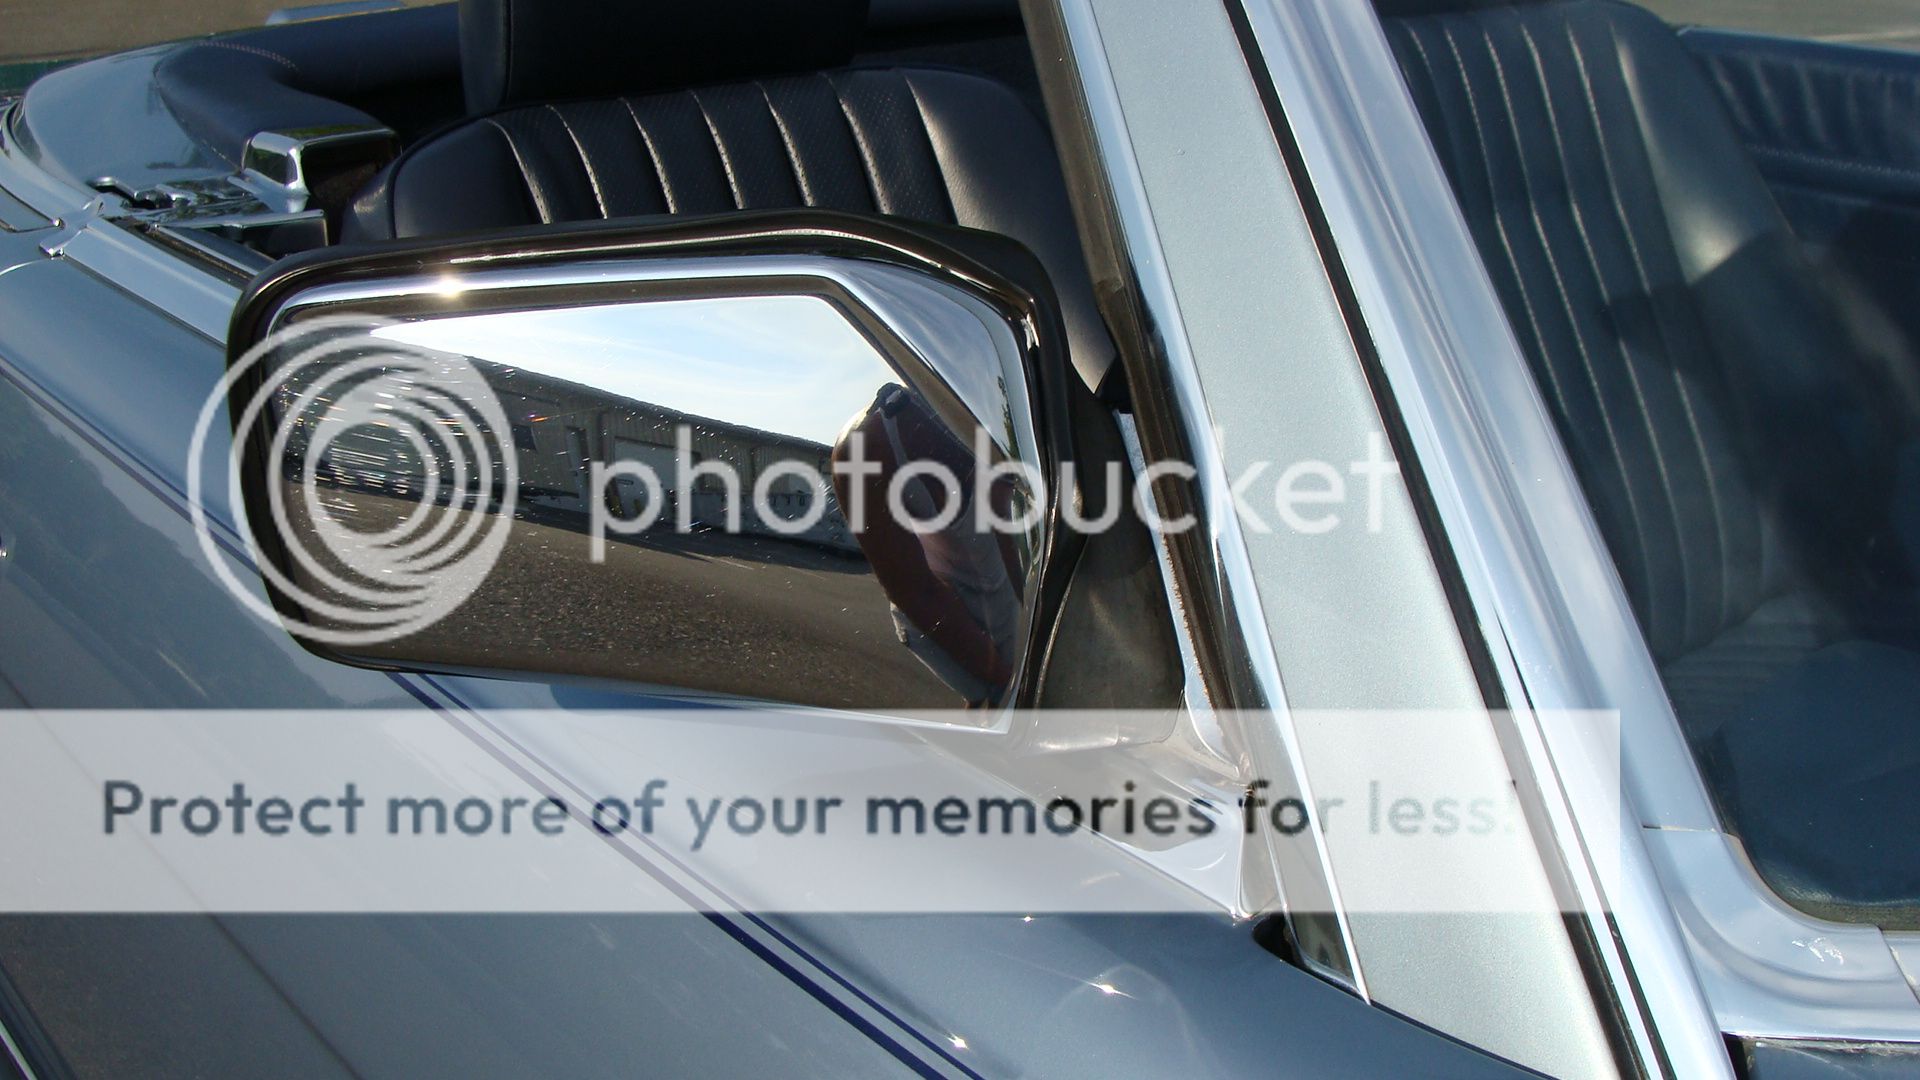 1988 Mercedes Benz 560 SL Diamond Blue Pristine Vehicle 32K Miles